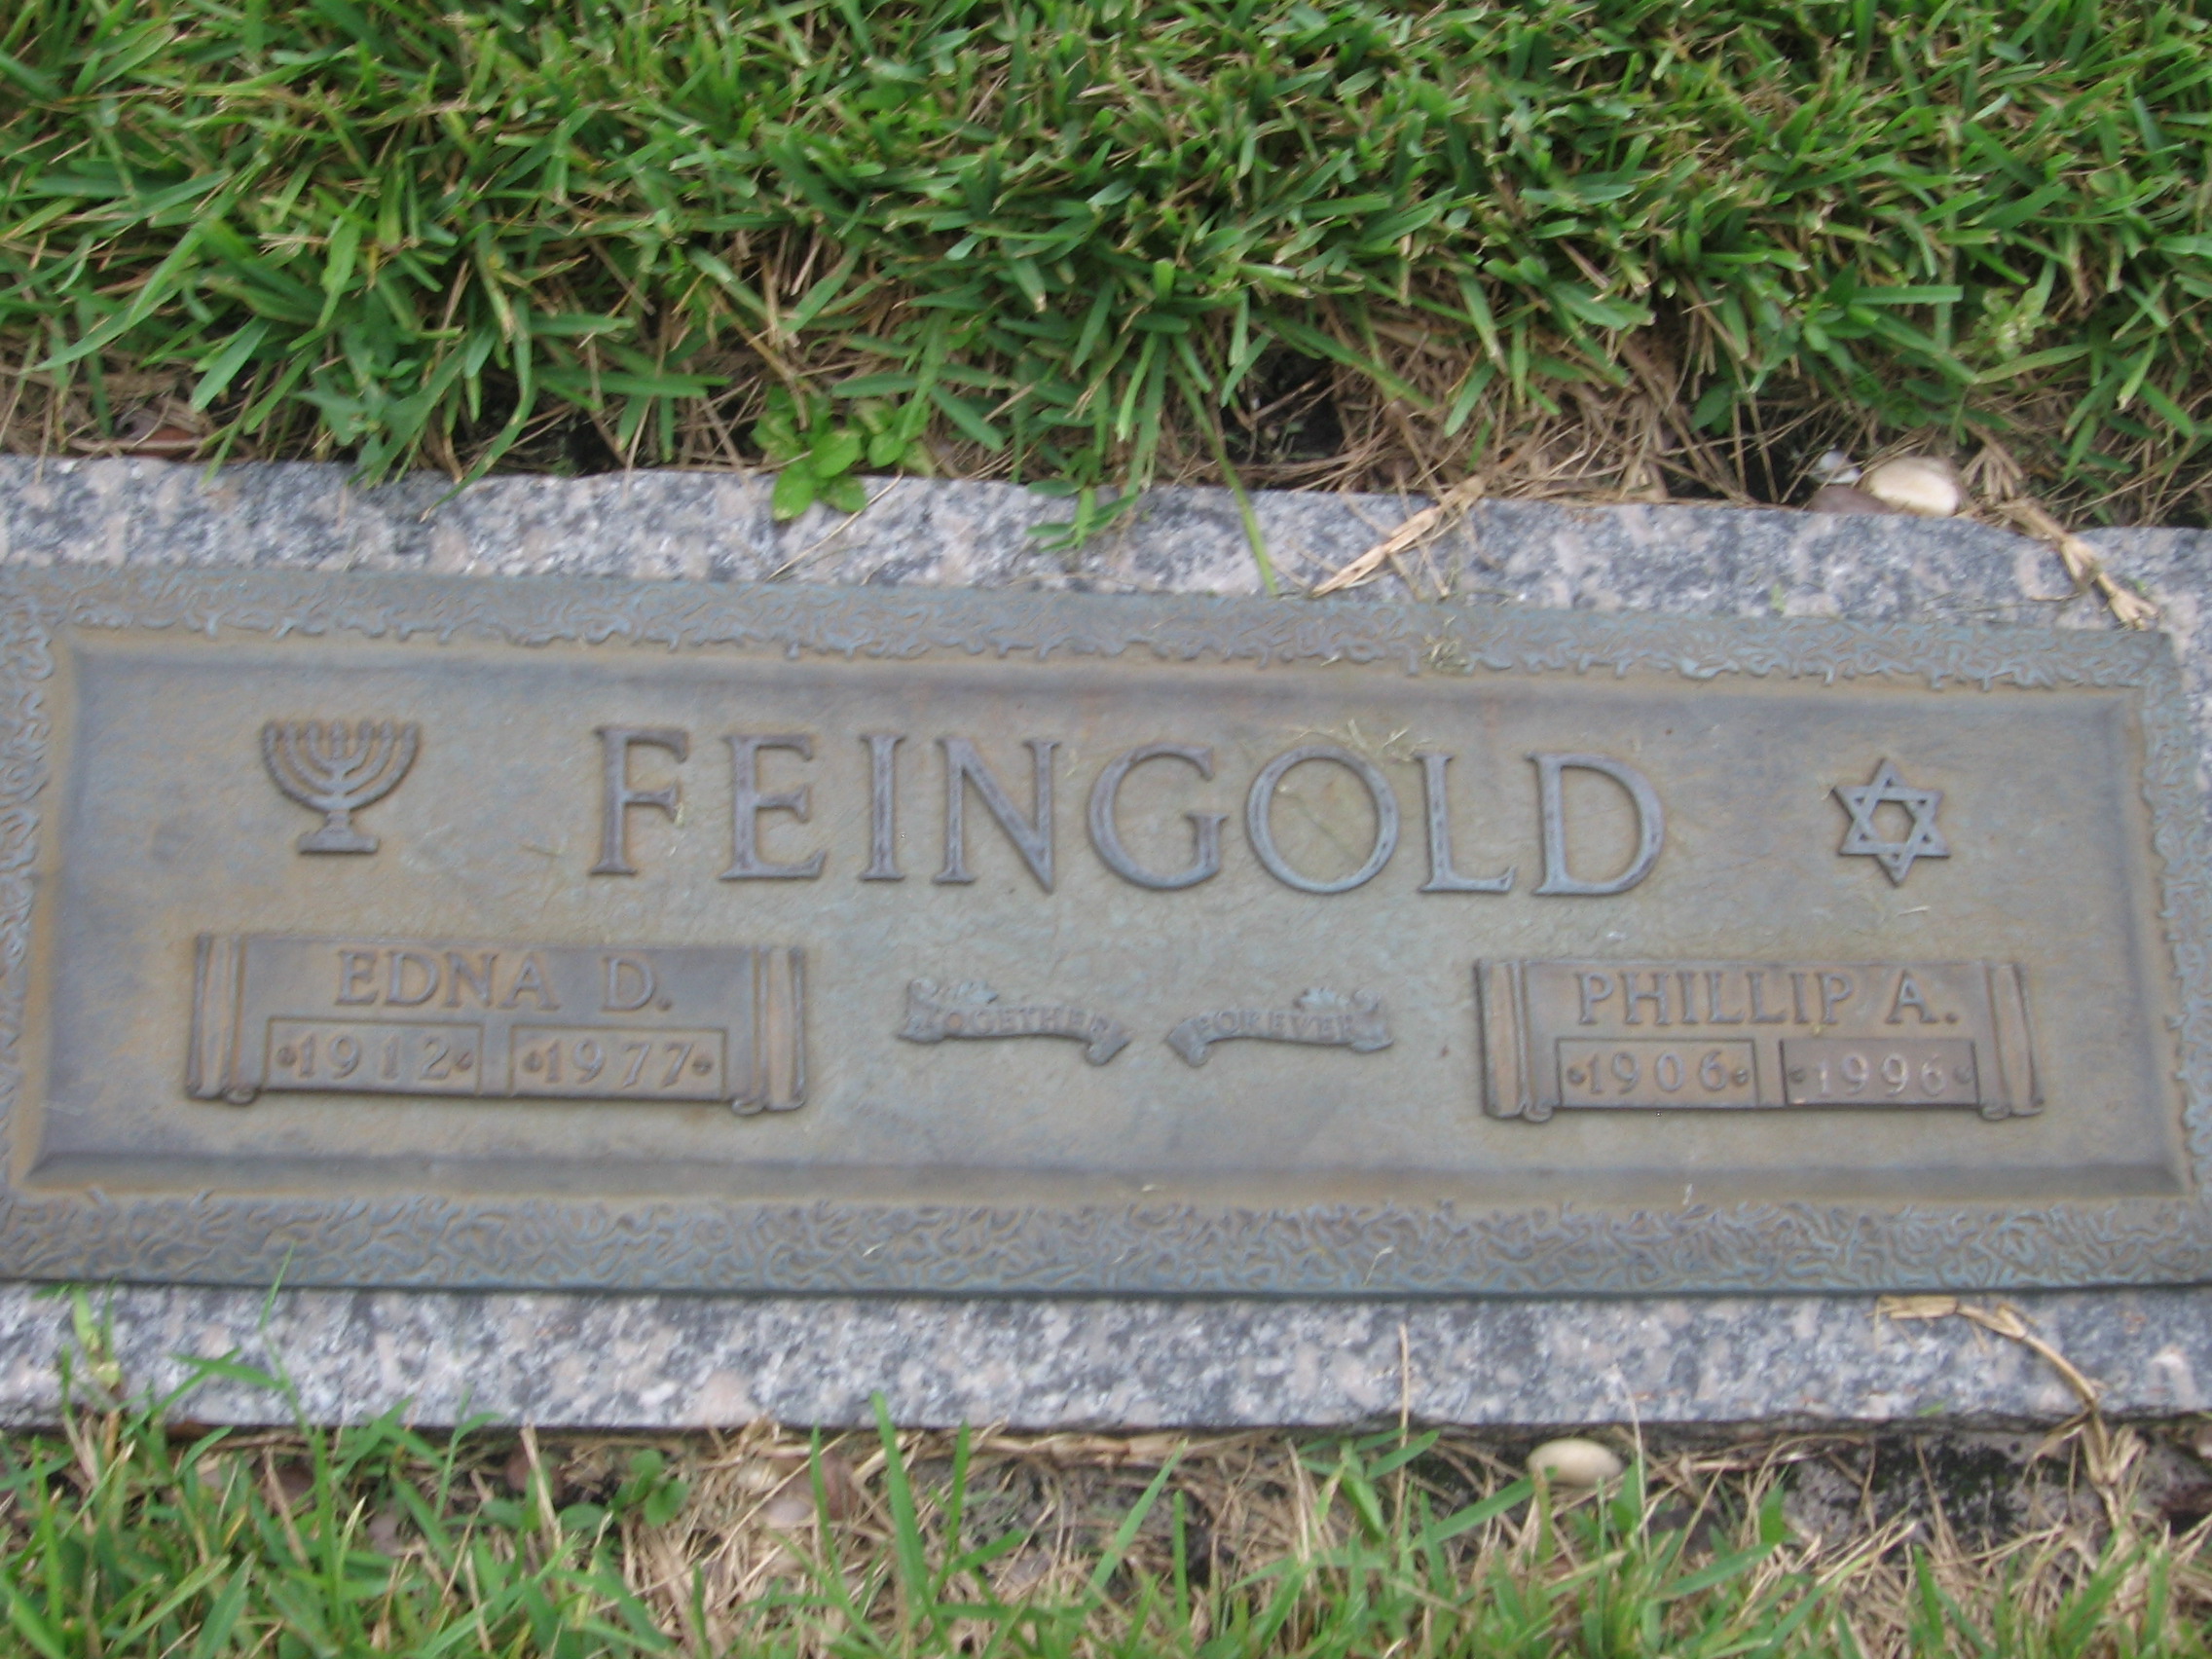 Phillip A Feingold